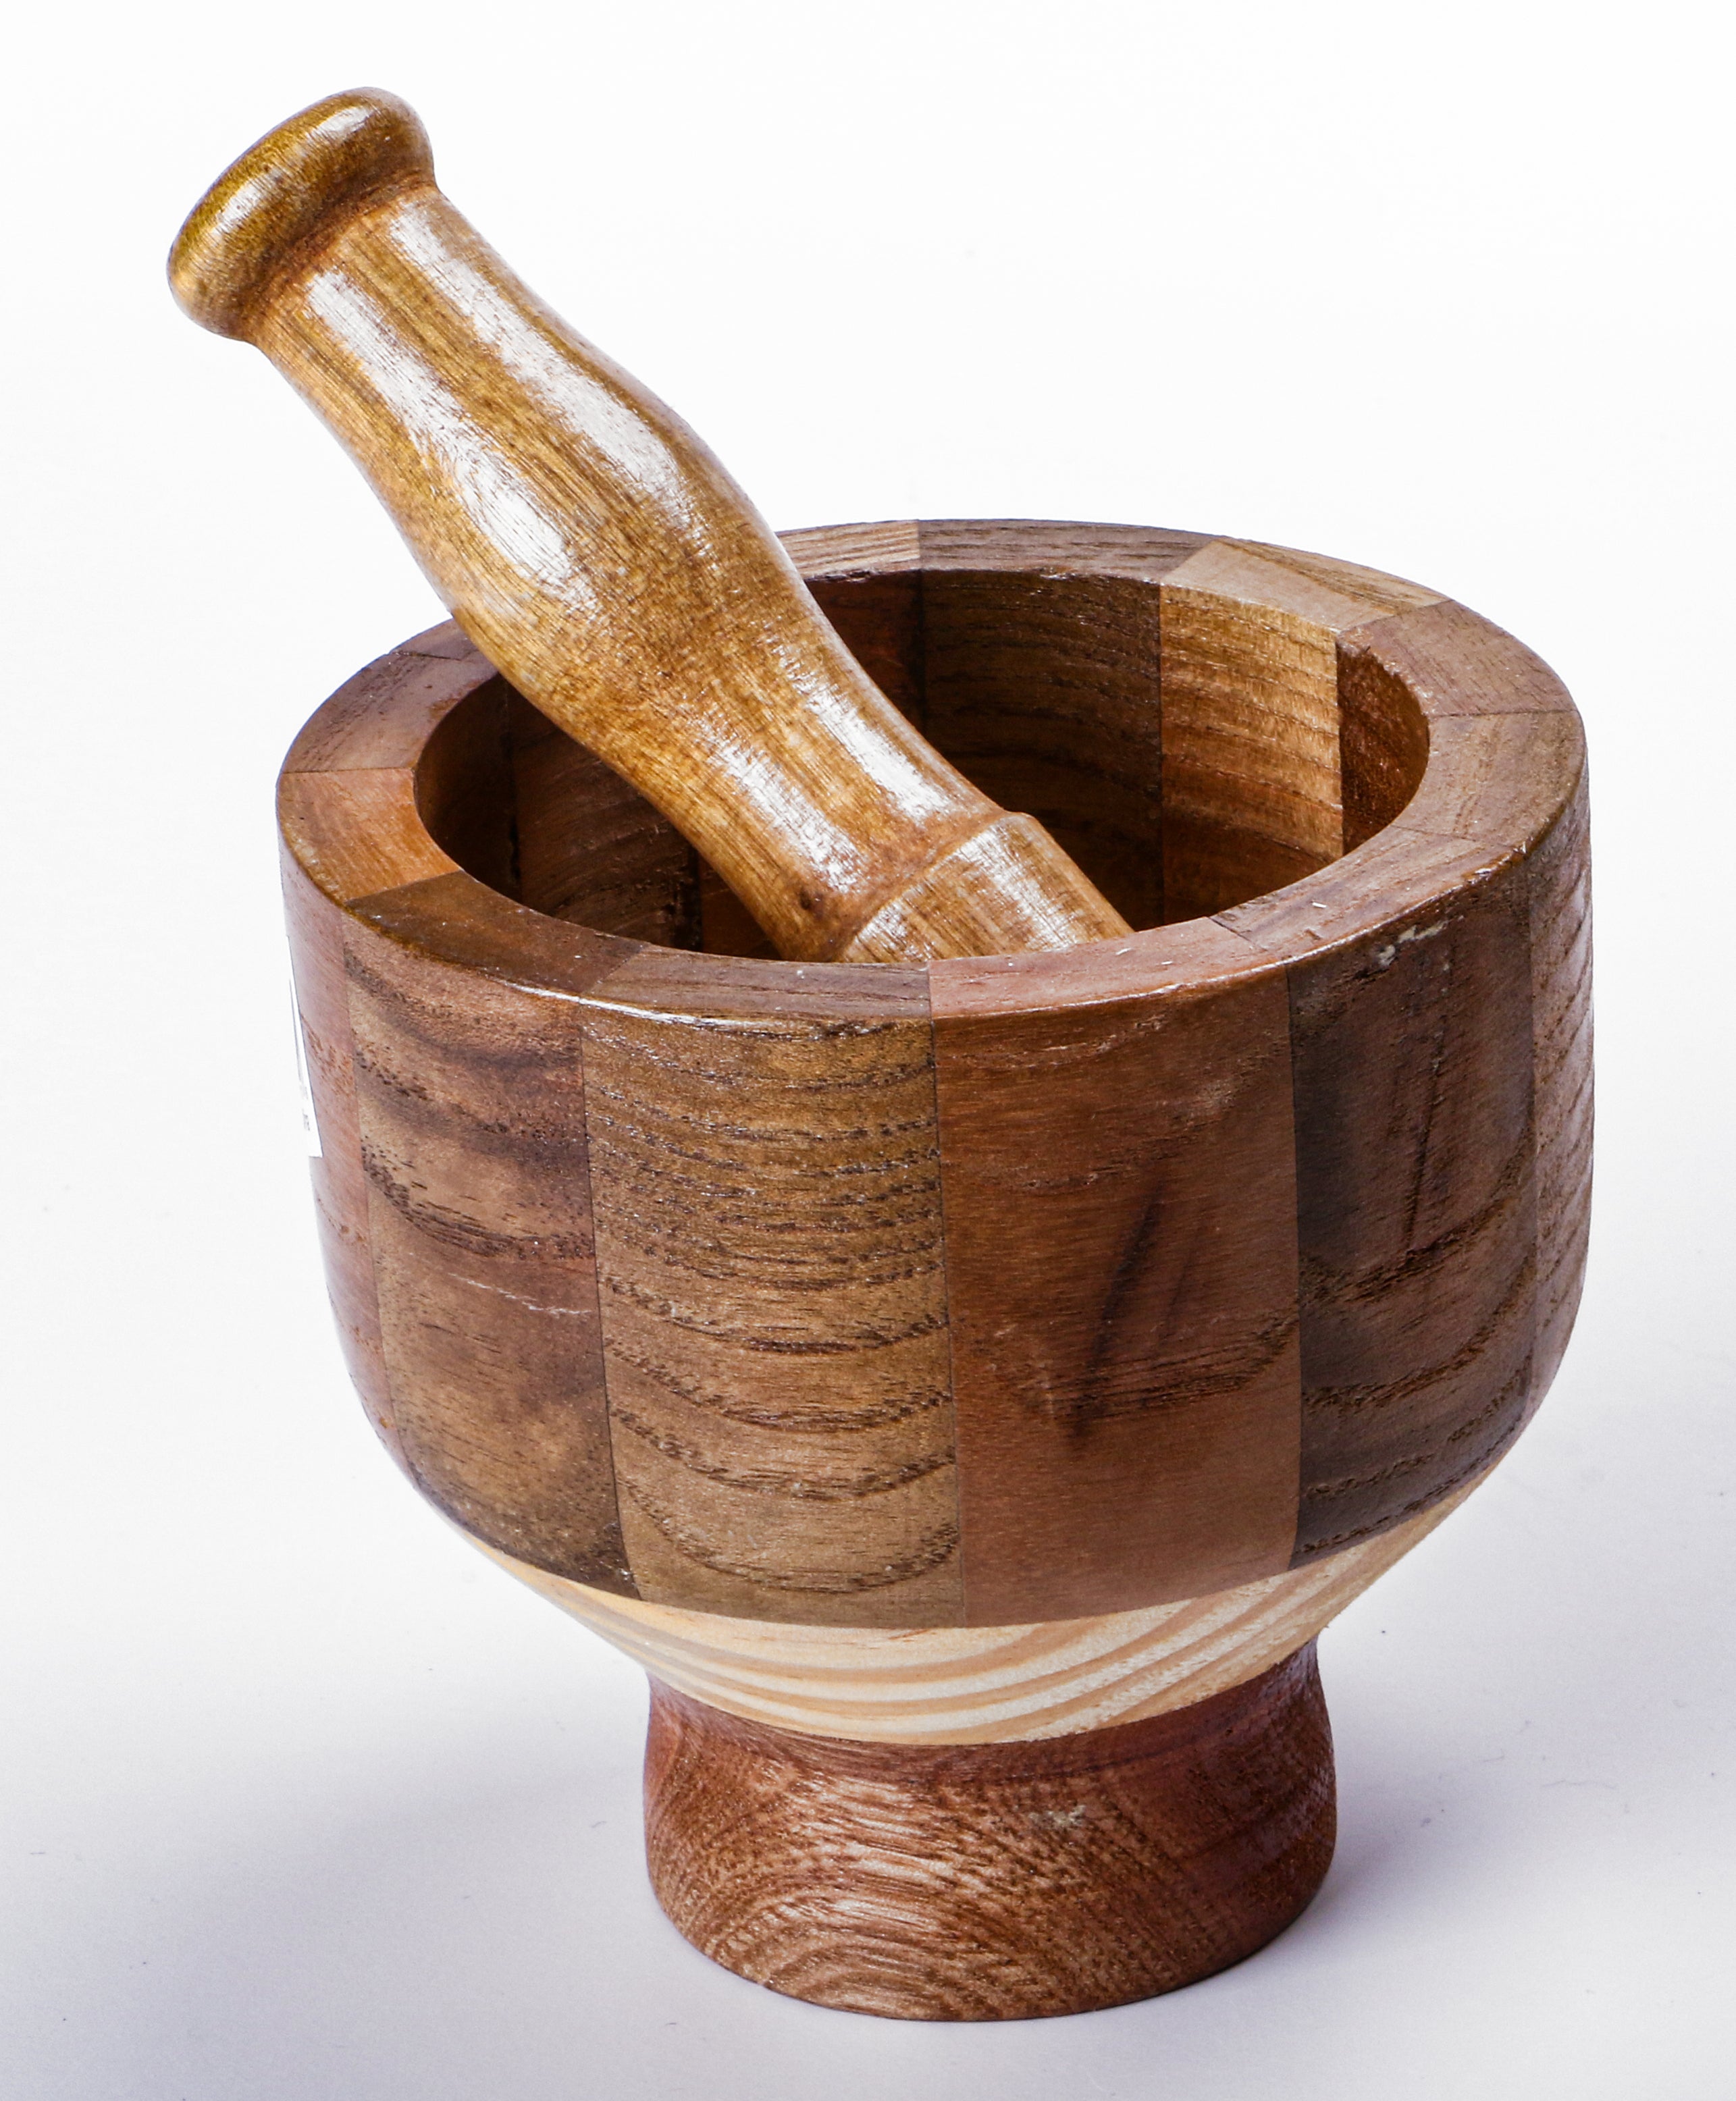 Wood Mortar and Pestle Set for Caipirinha - Authentic Brazilian Kitchen Tool